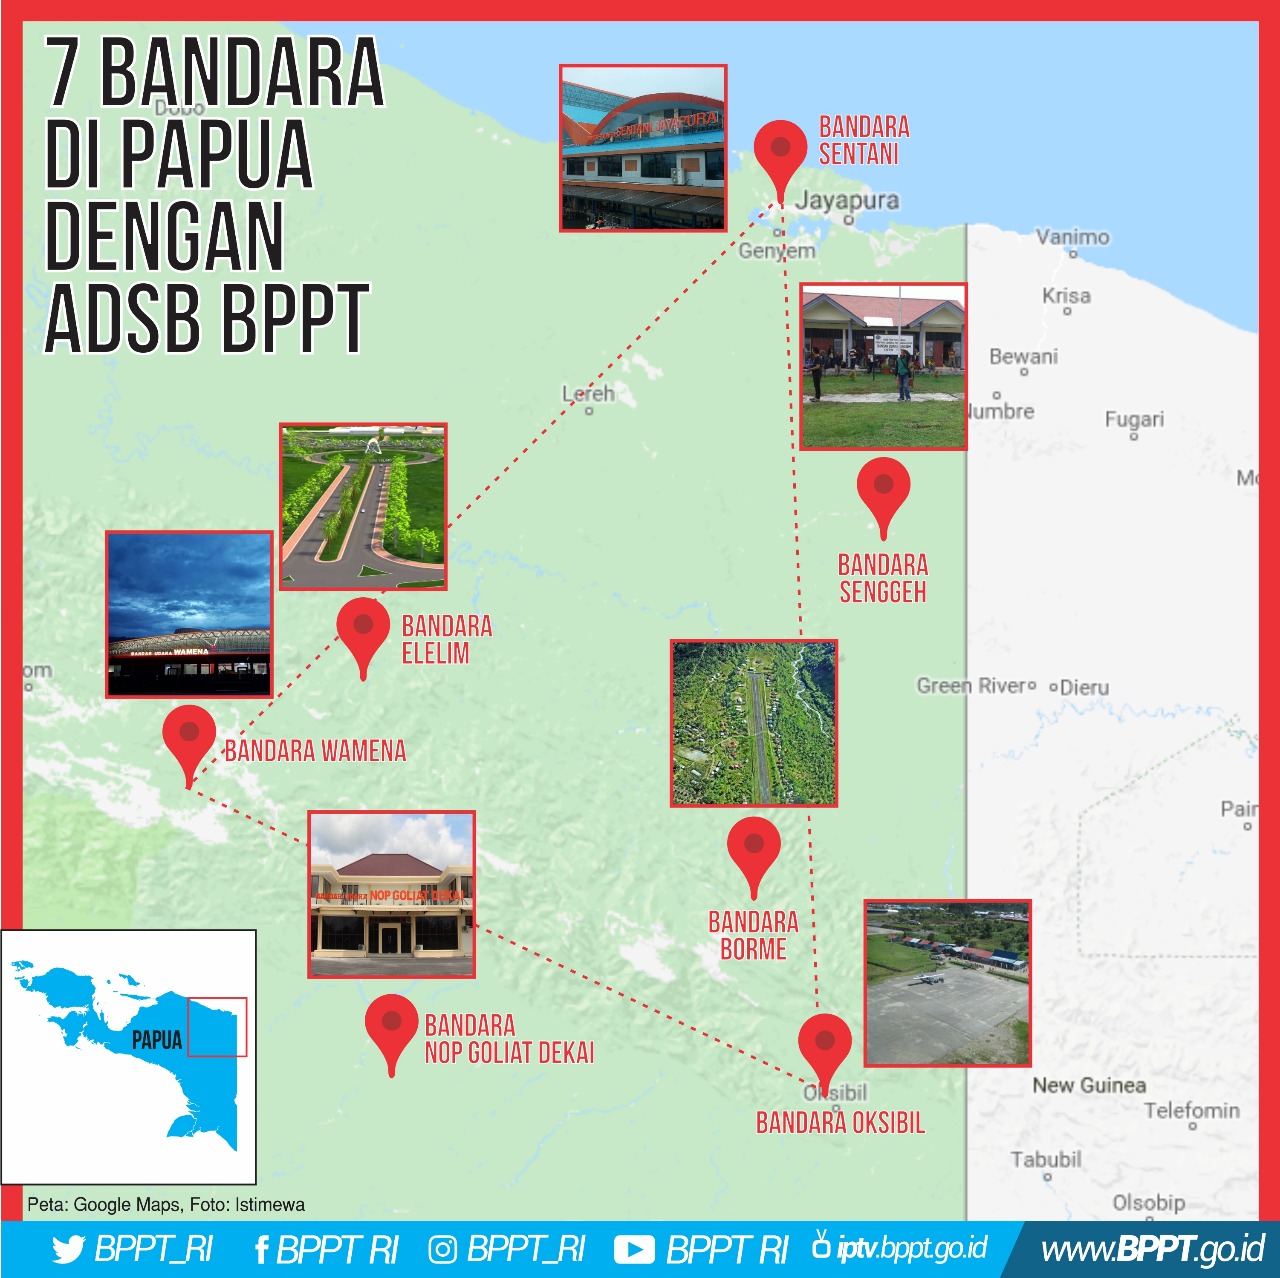 7 Bandara di Papua Siap Gunakan Alat Pantau Pesawat, Karya BPPT